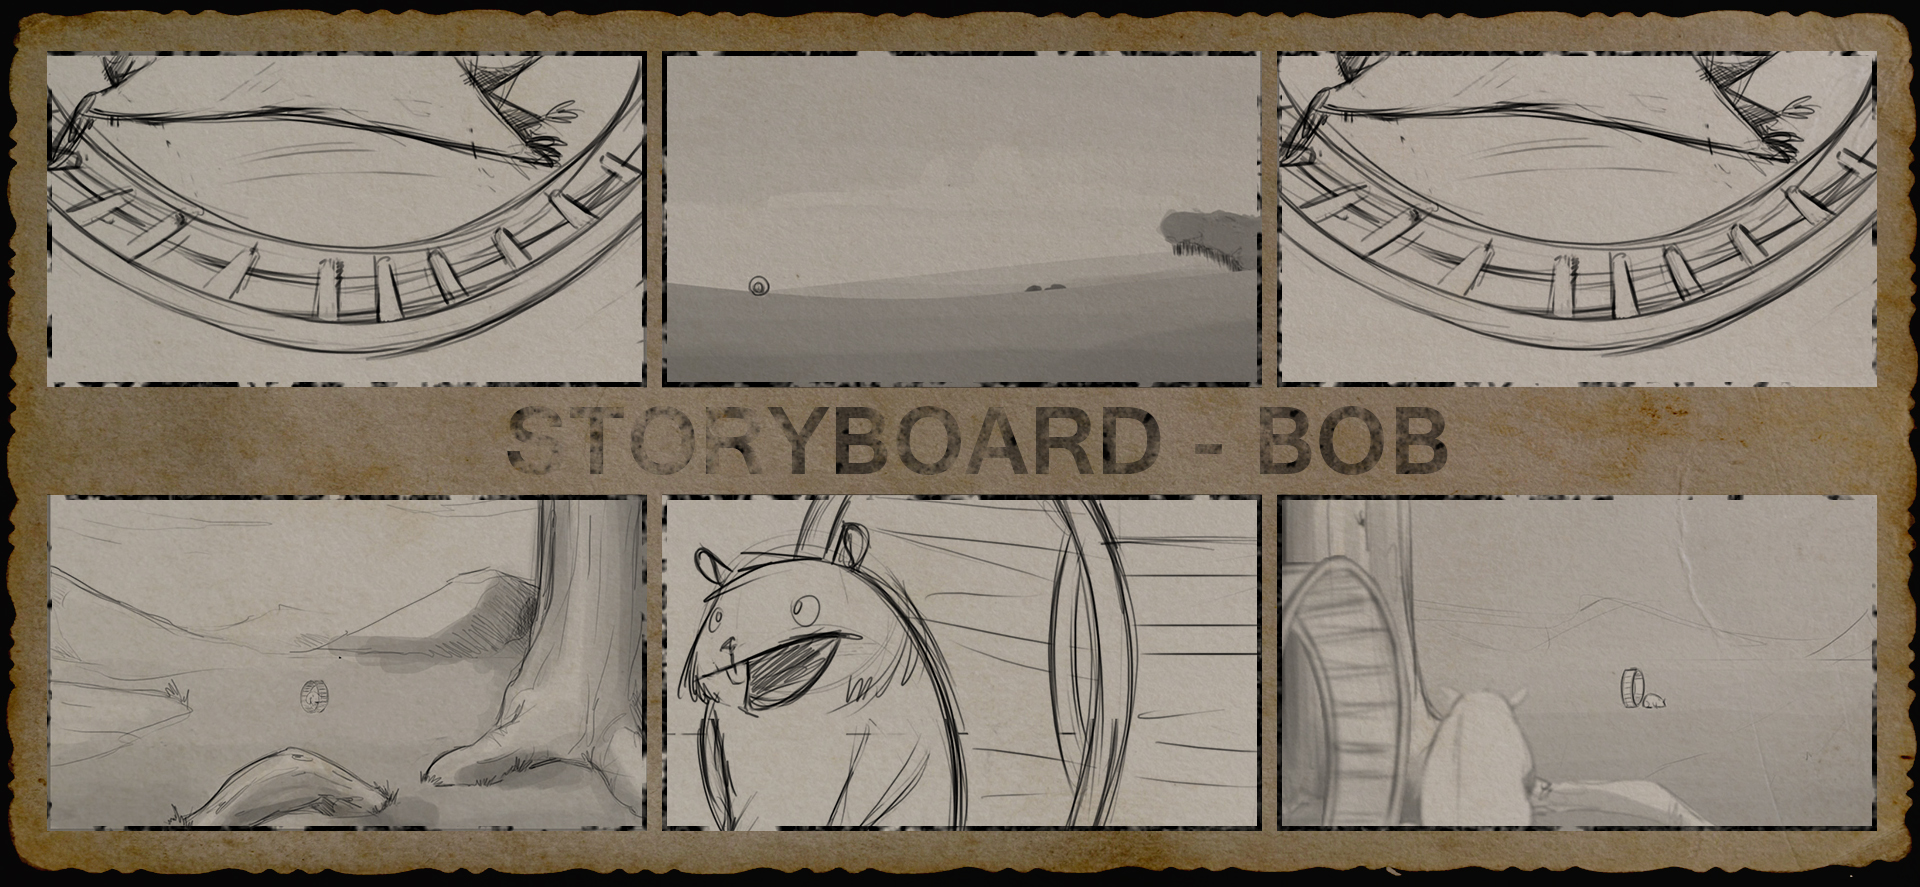 Bob_Storyboard_0000_1